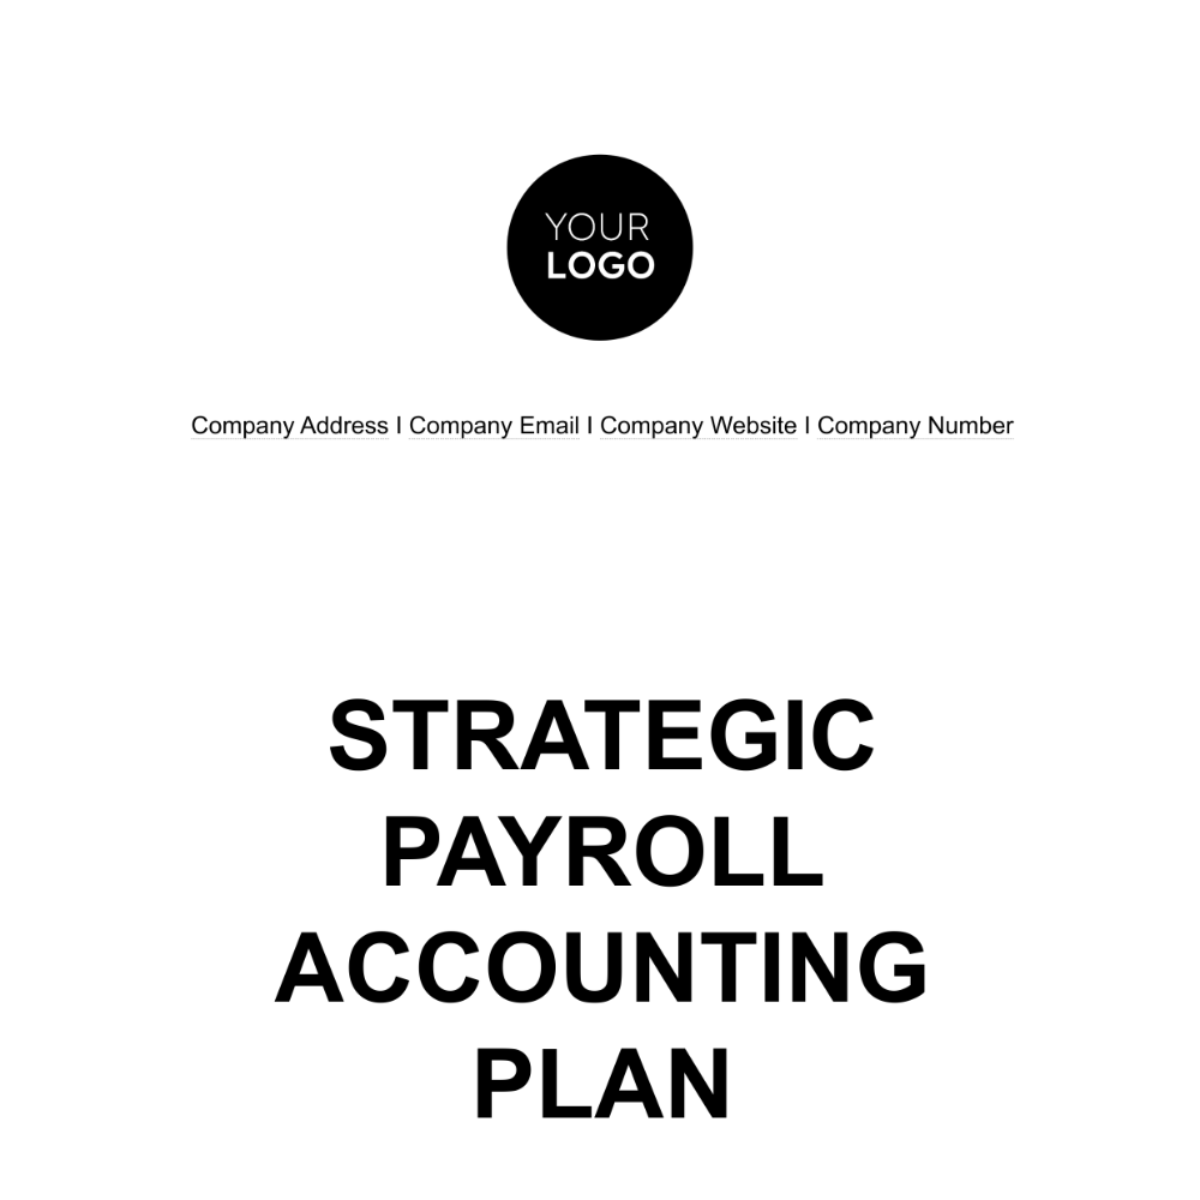 Strategic Payroll Accounting Plan Template